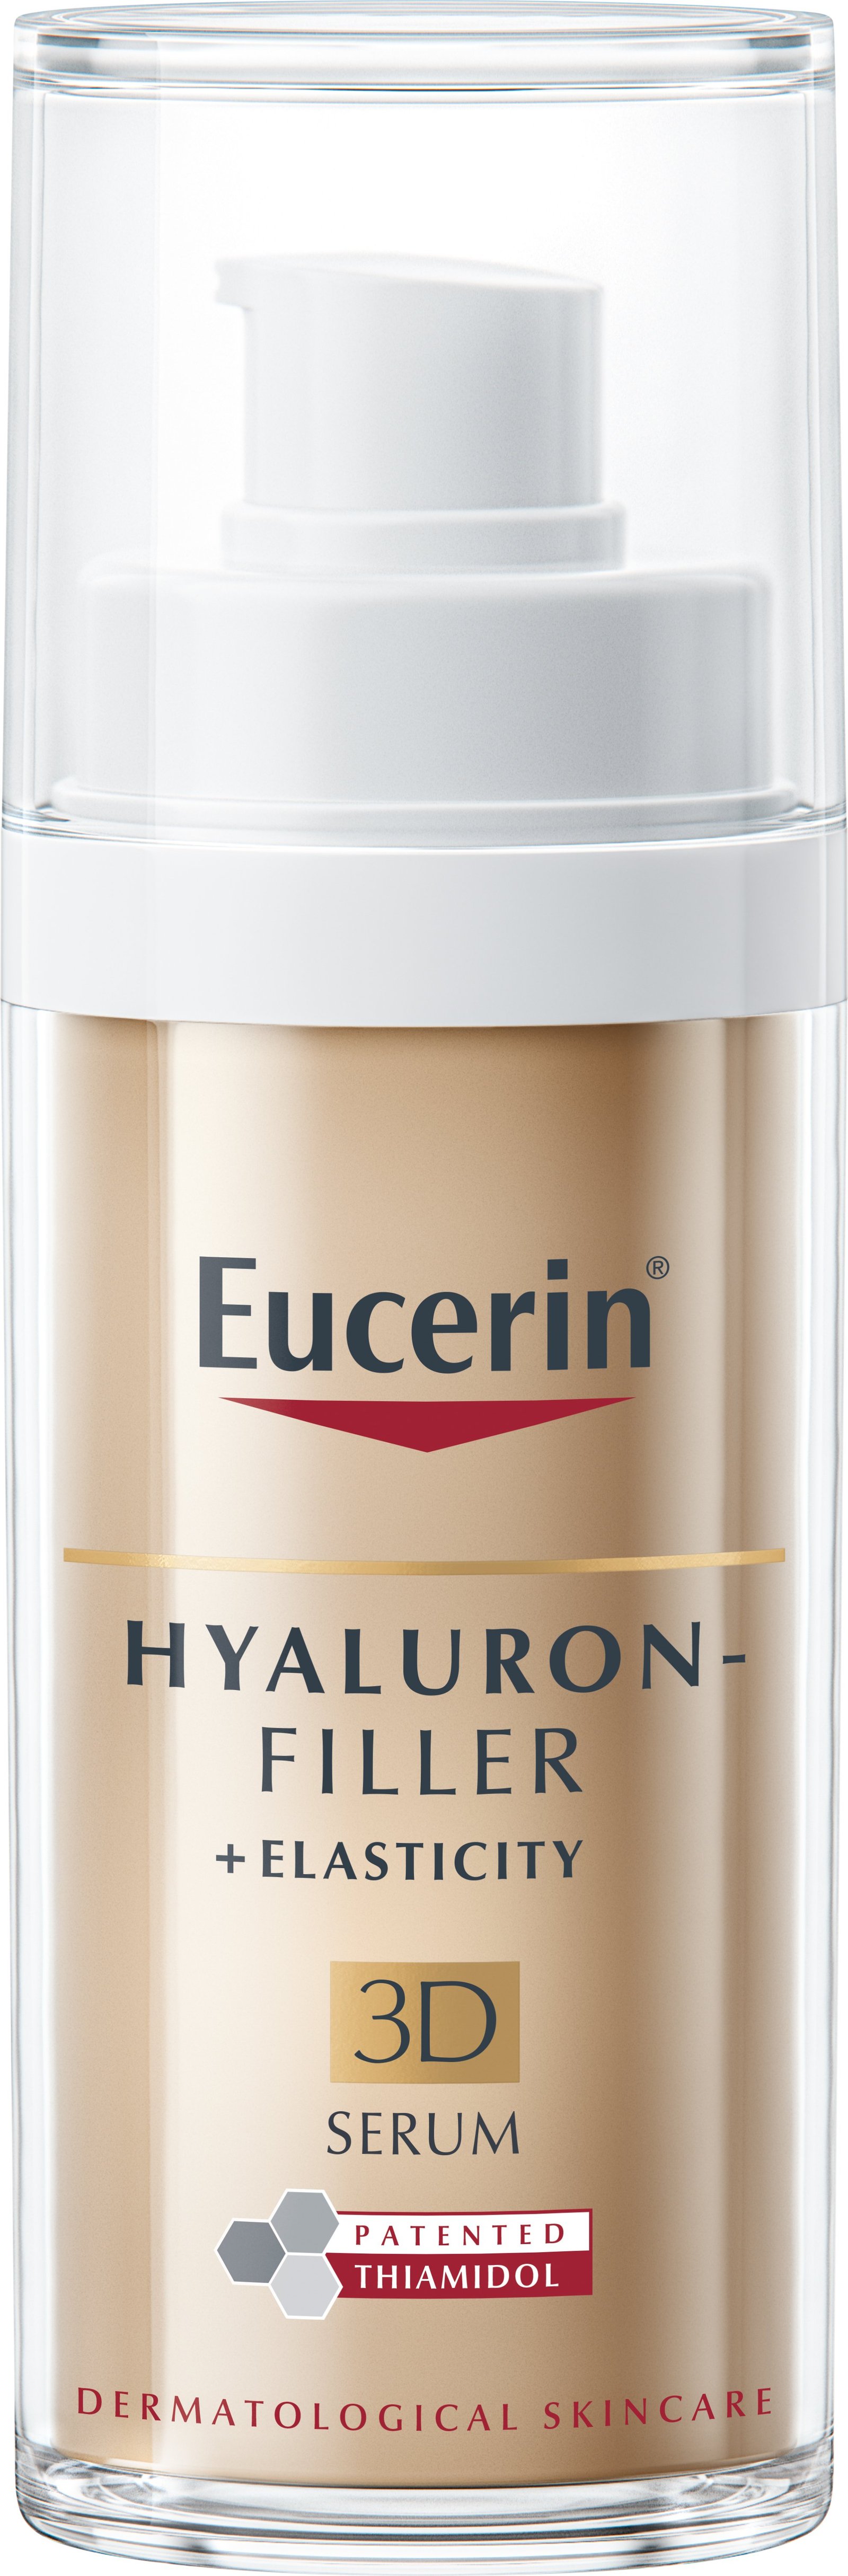 Eucerin Hyaluron-Filler+ Elasticity 3D Serum 30 ml